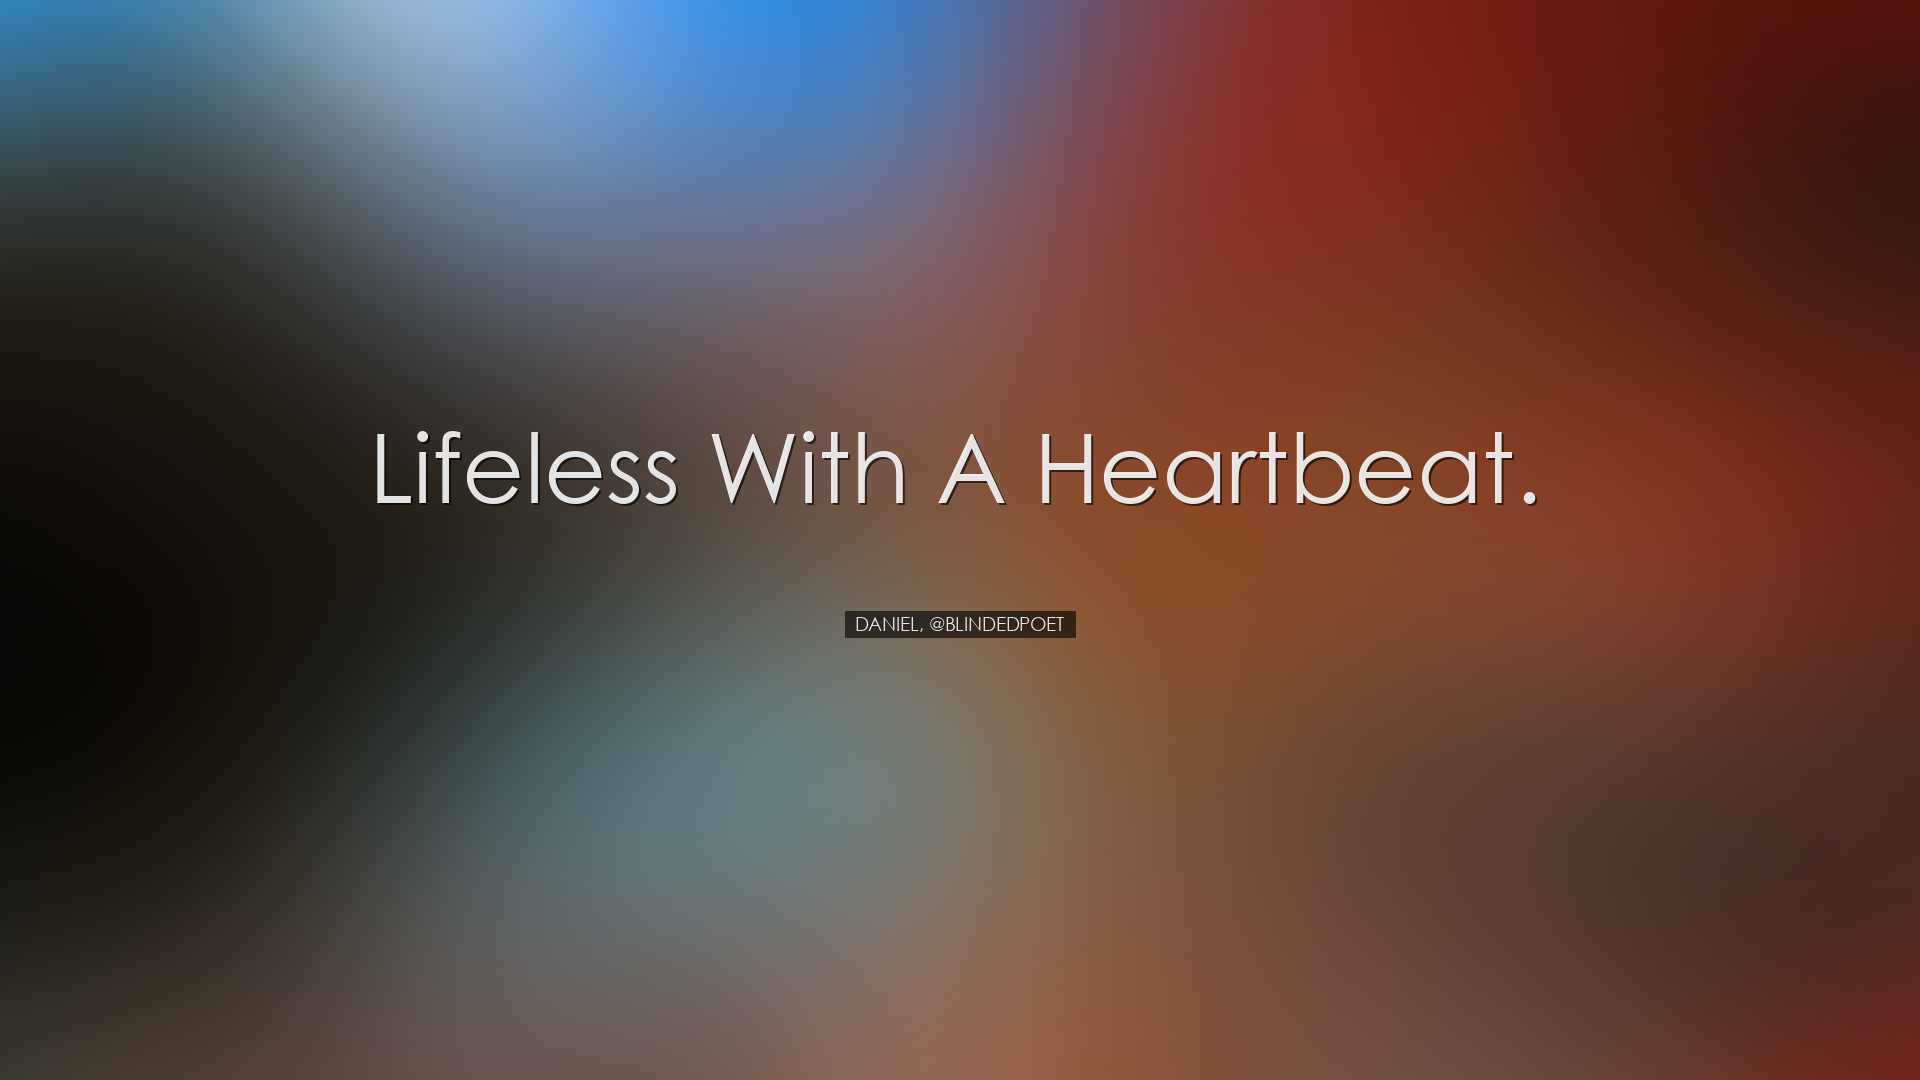 Lifeless with a heartbeat. - Daniel, @blindedpoet